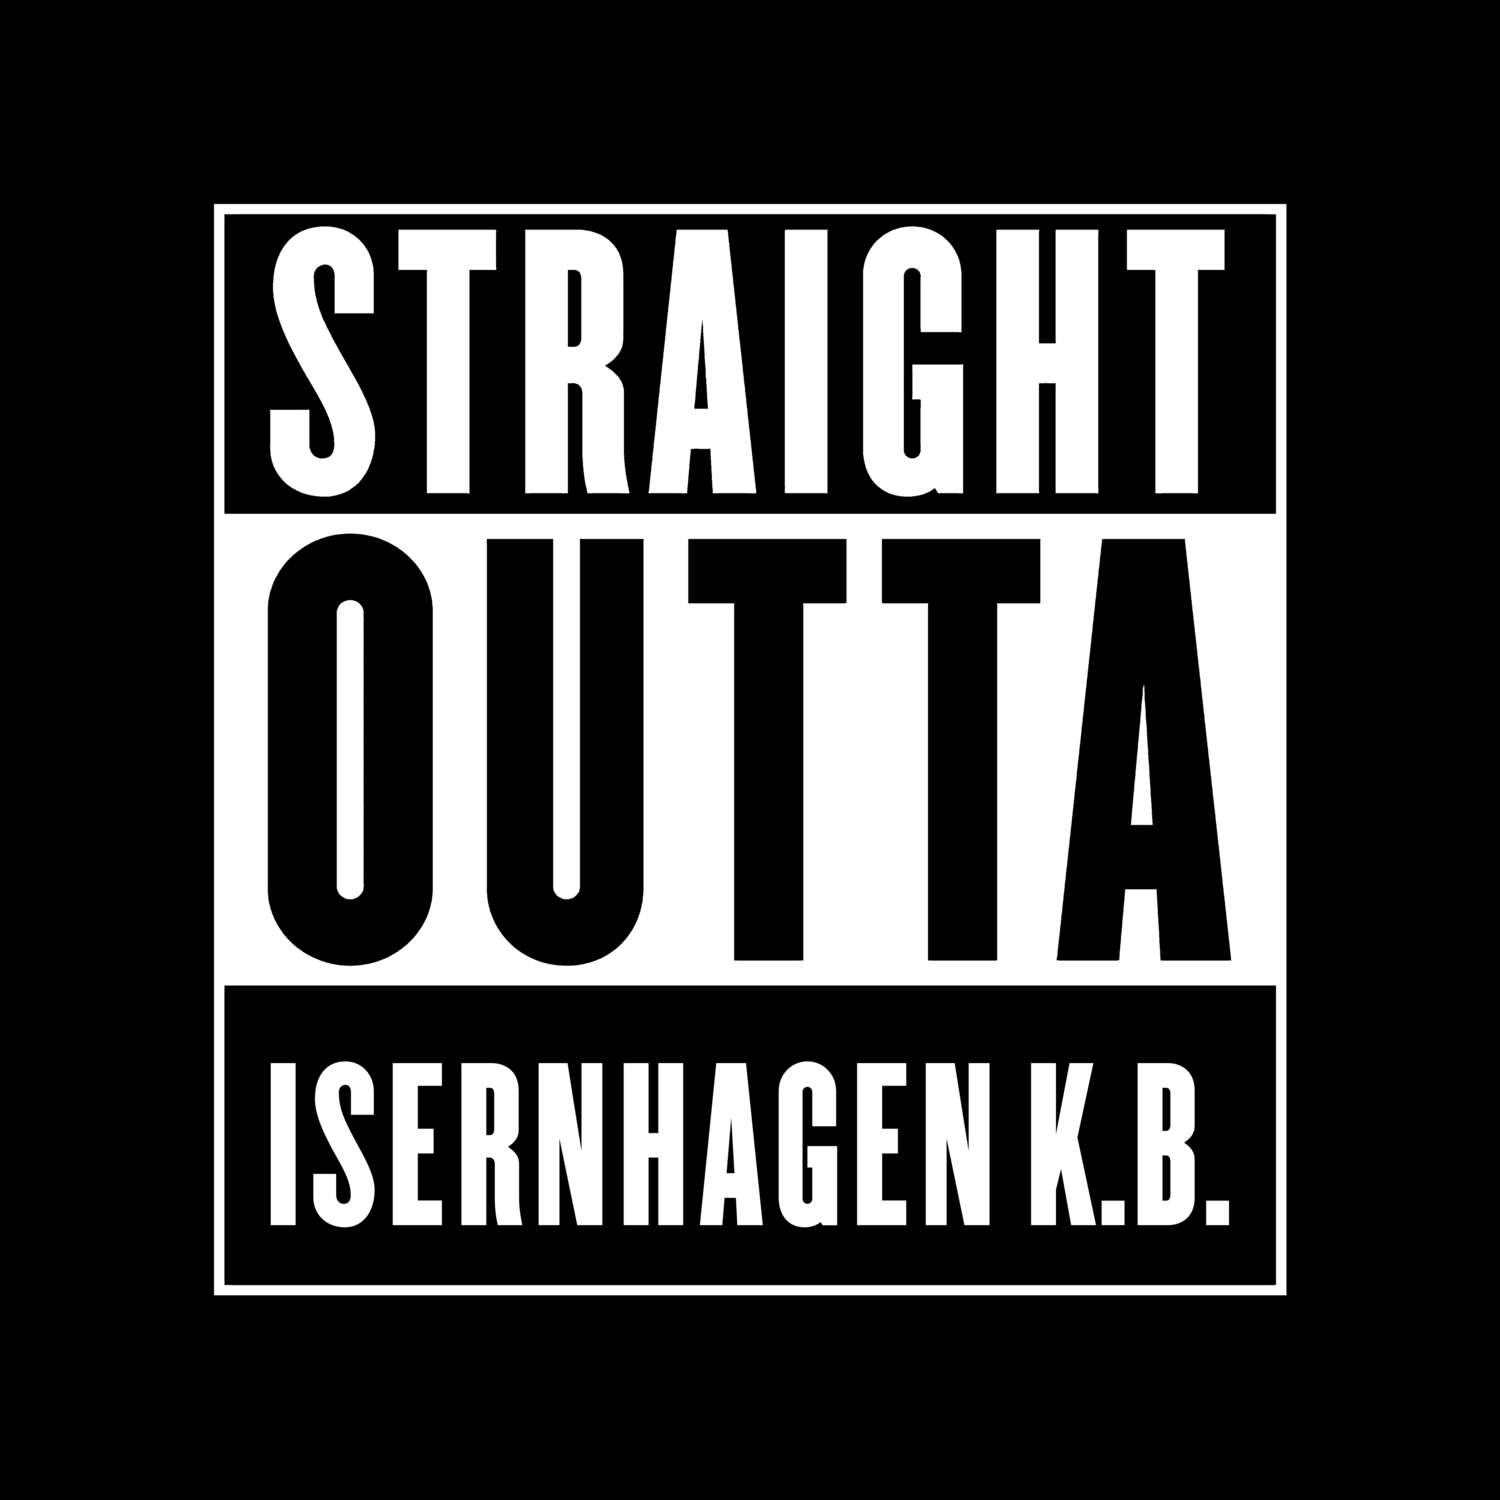 Isernhagen K.B. T-Shirt »Straight Outta«